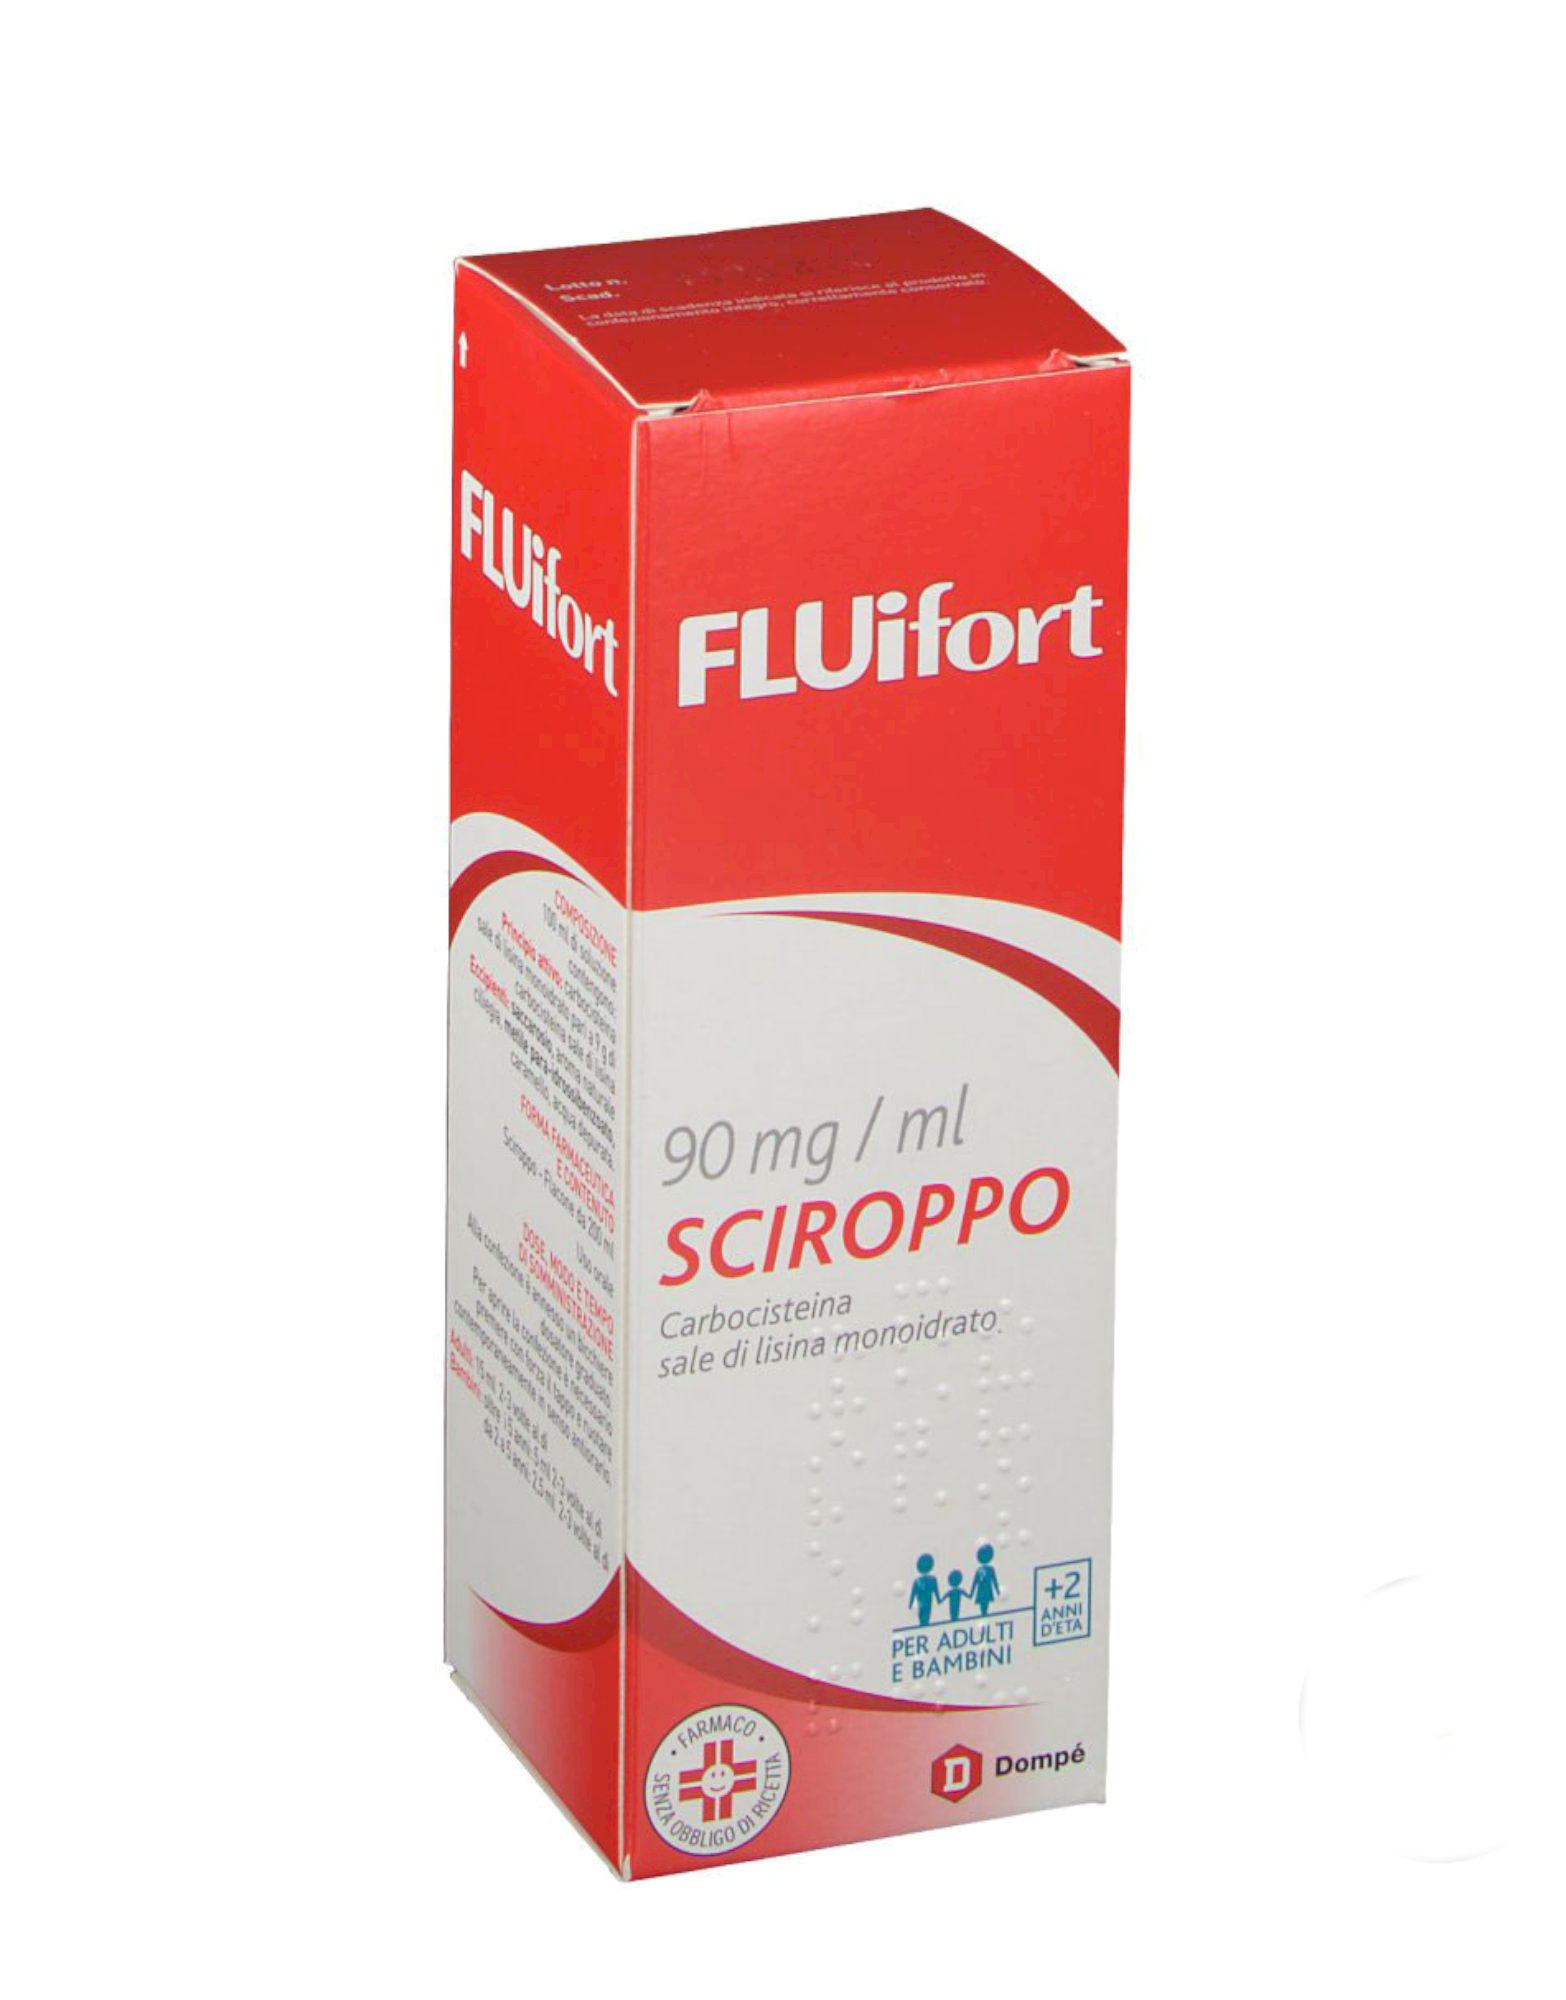 Fluifort 90 mg/ml Sciroppo di FLUIFORT (200ml)